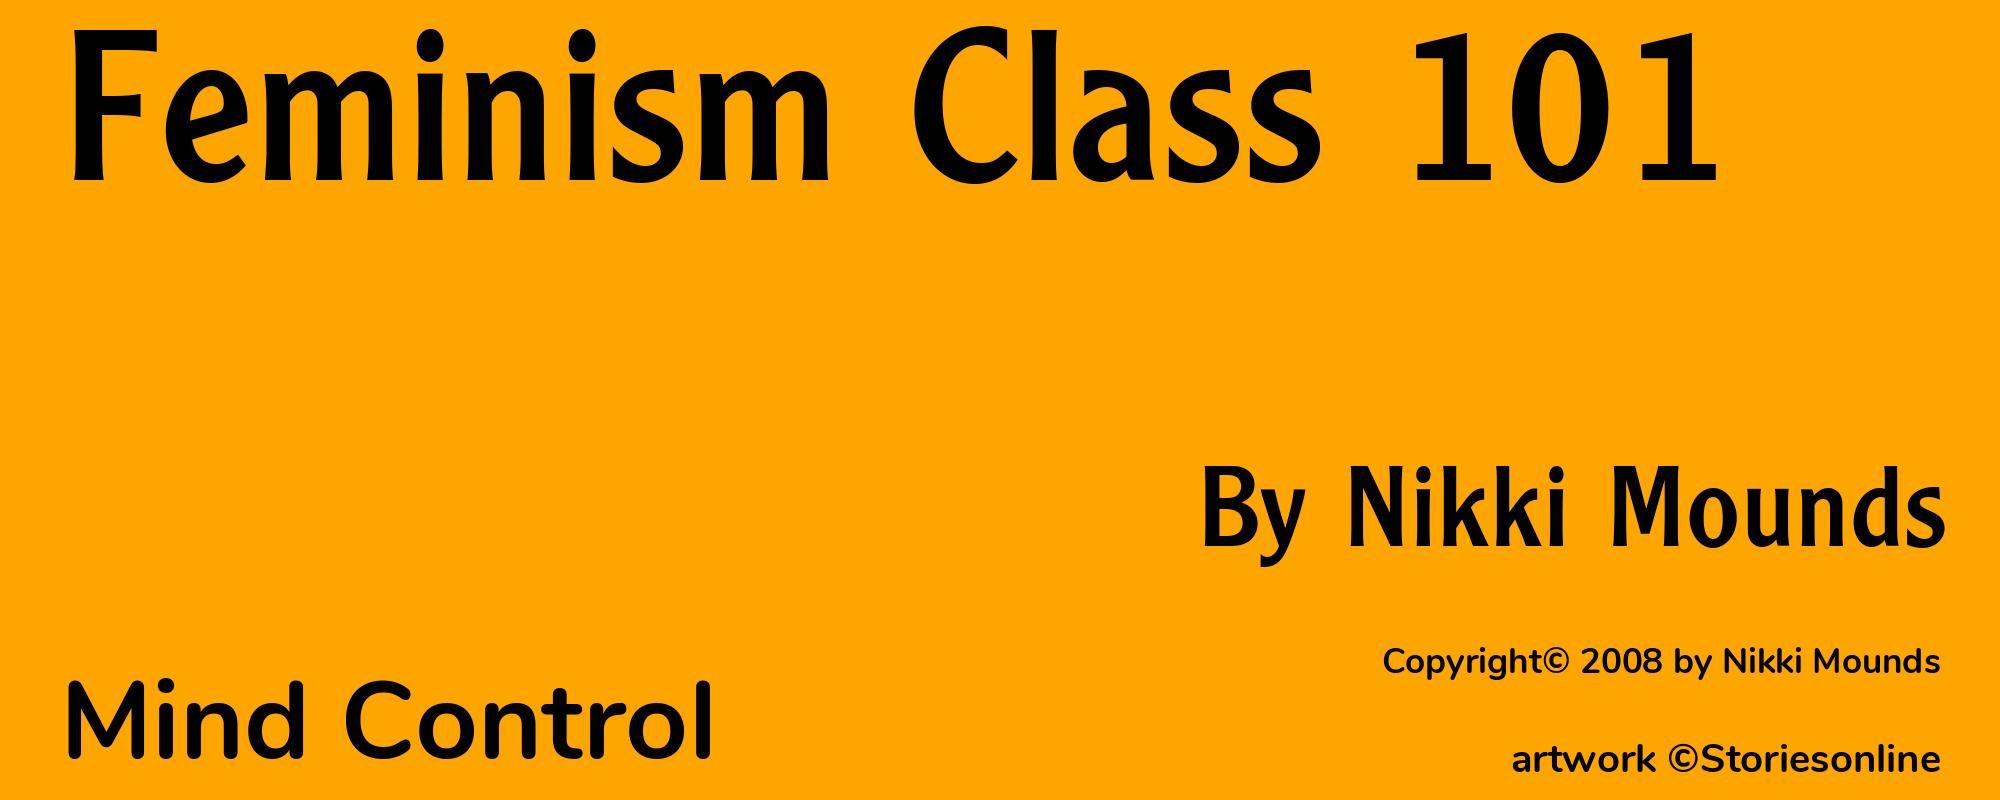 Feminism Class 101 - Cover